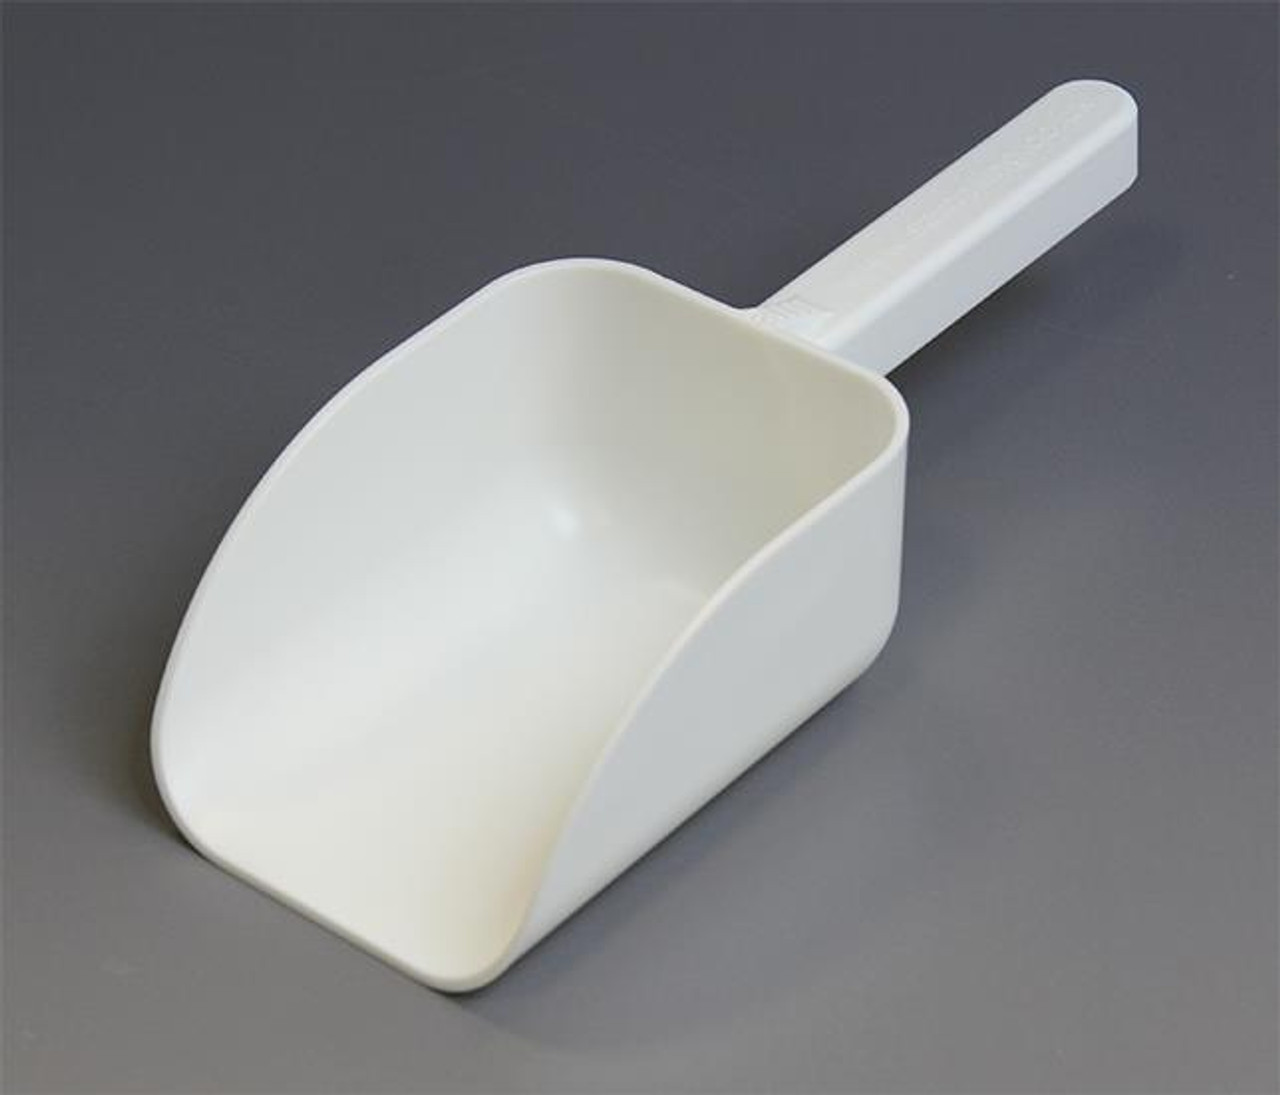 Description: Disposable Pharmaceutical Scoop – 500 ml 
High Impact Polystyrene White
Case 100 Pre-sterilized